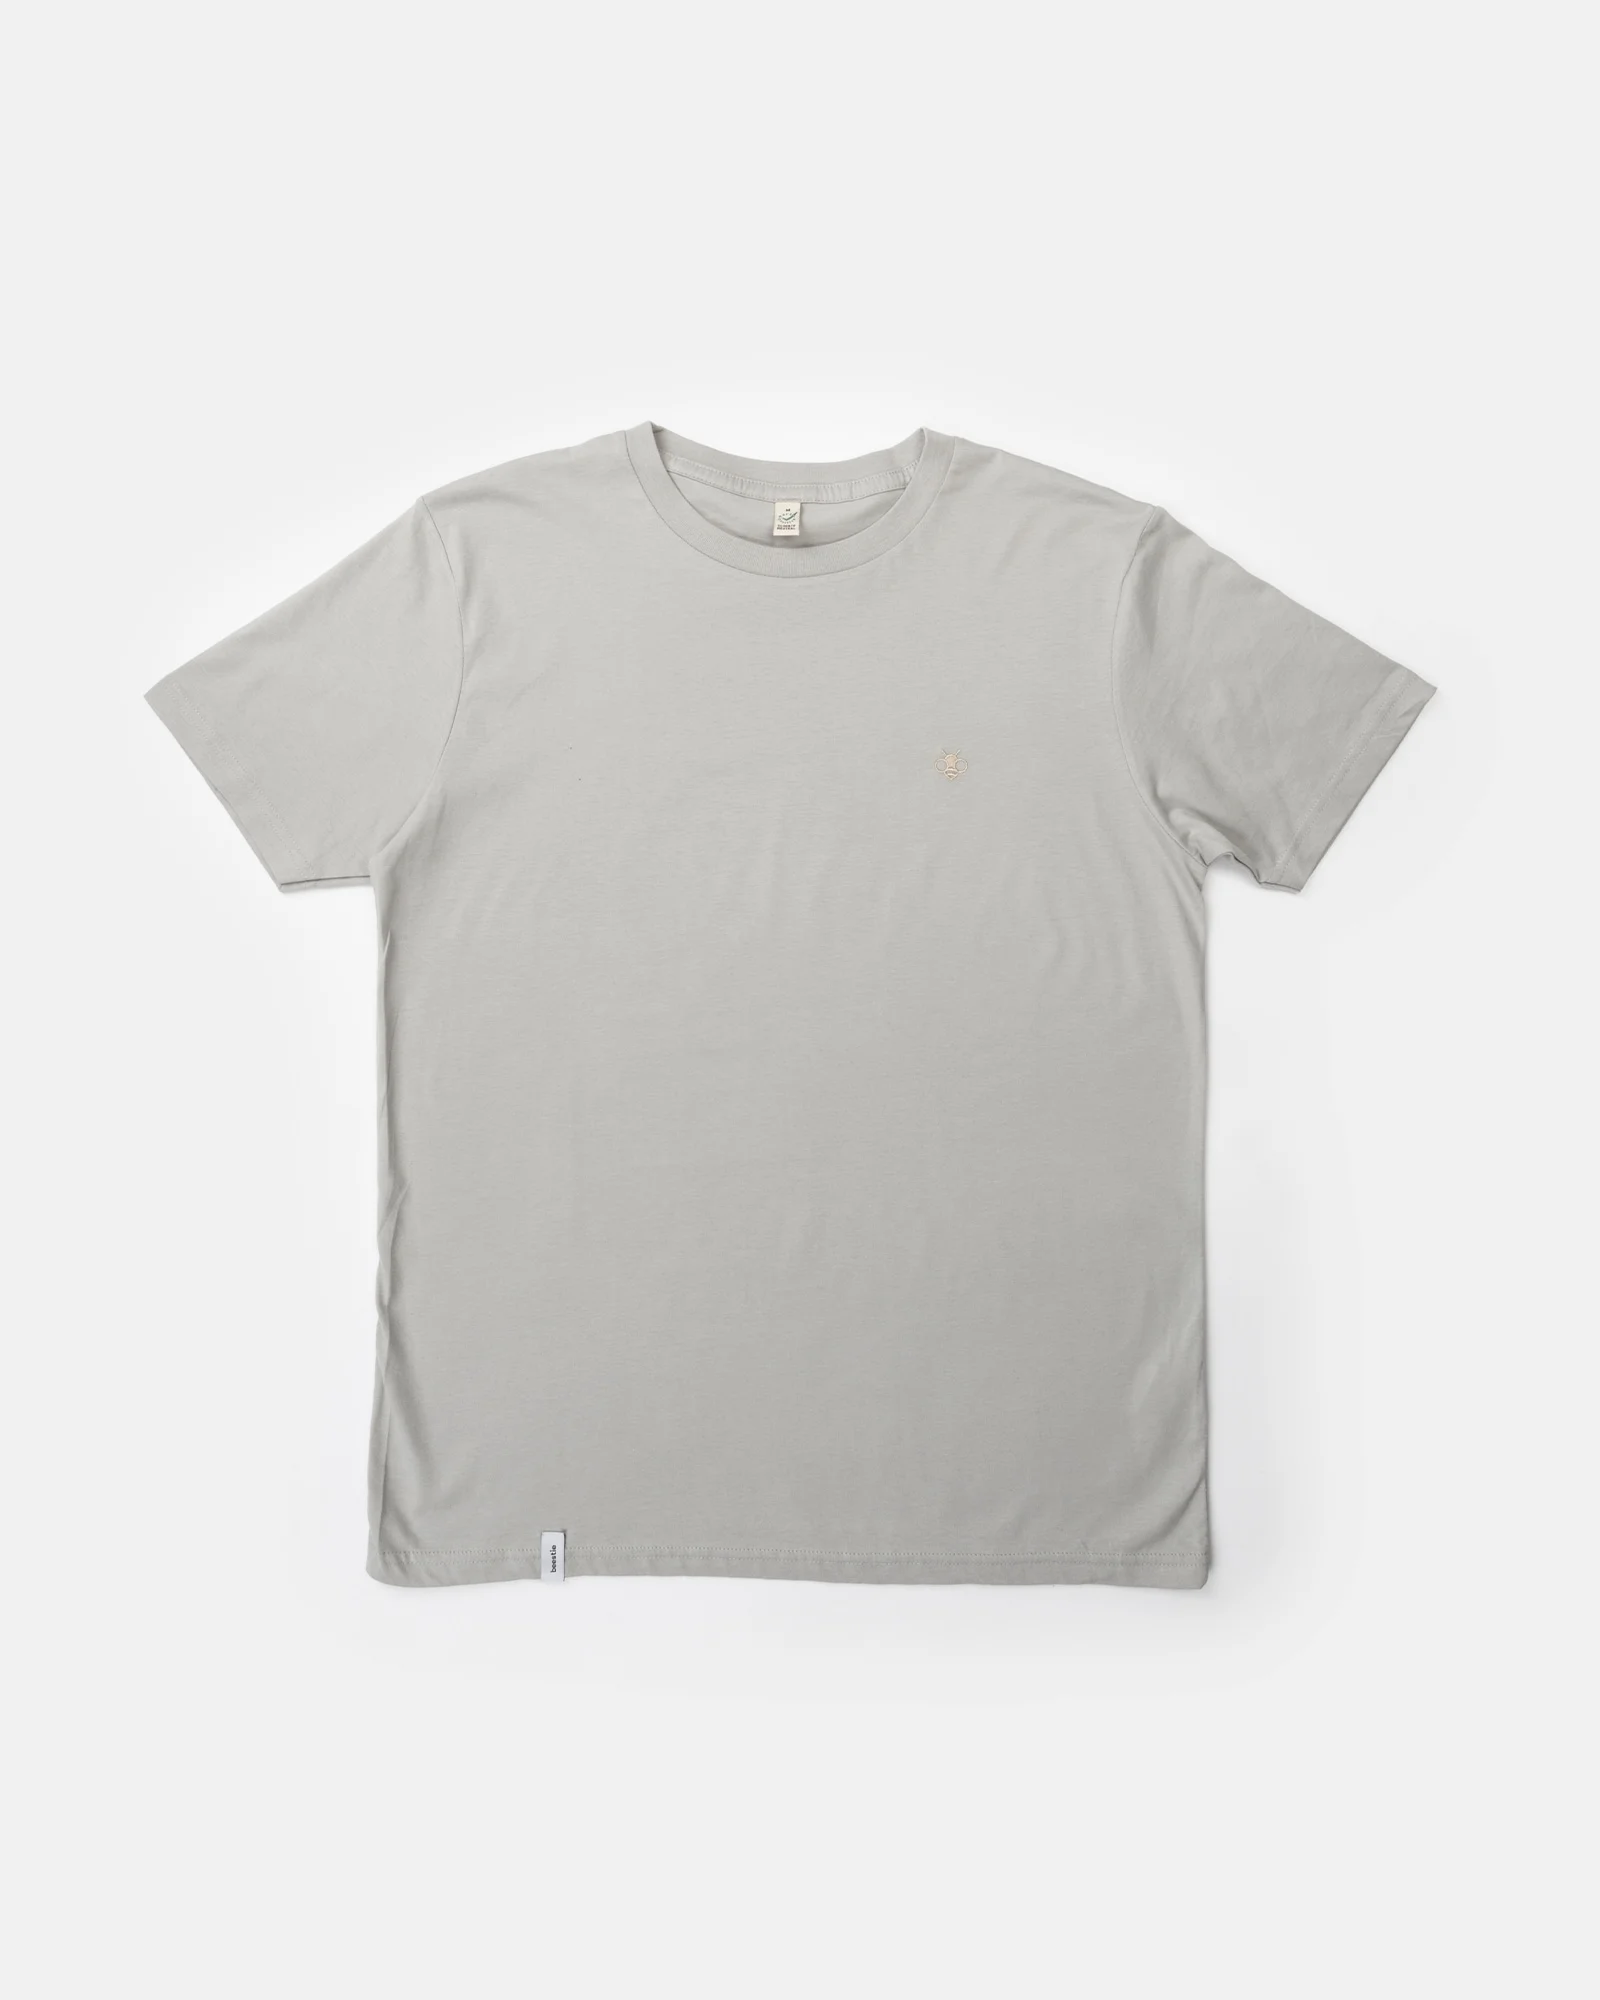 Produktbild beestie Organic Color T-Shirt Unisex in der FarbeLight Grey